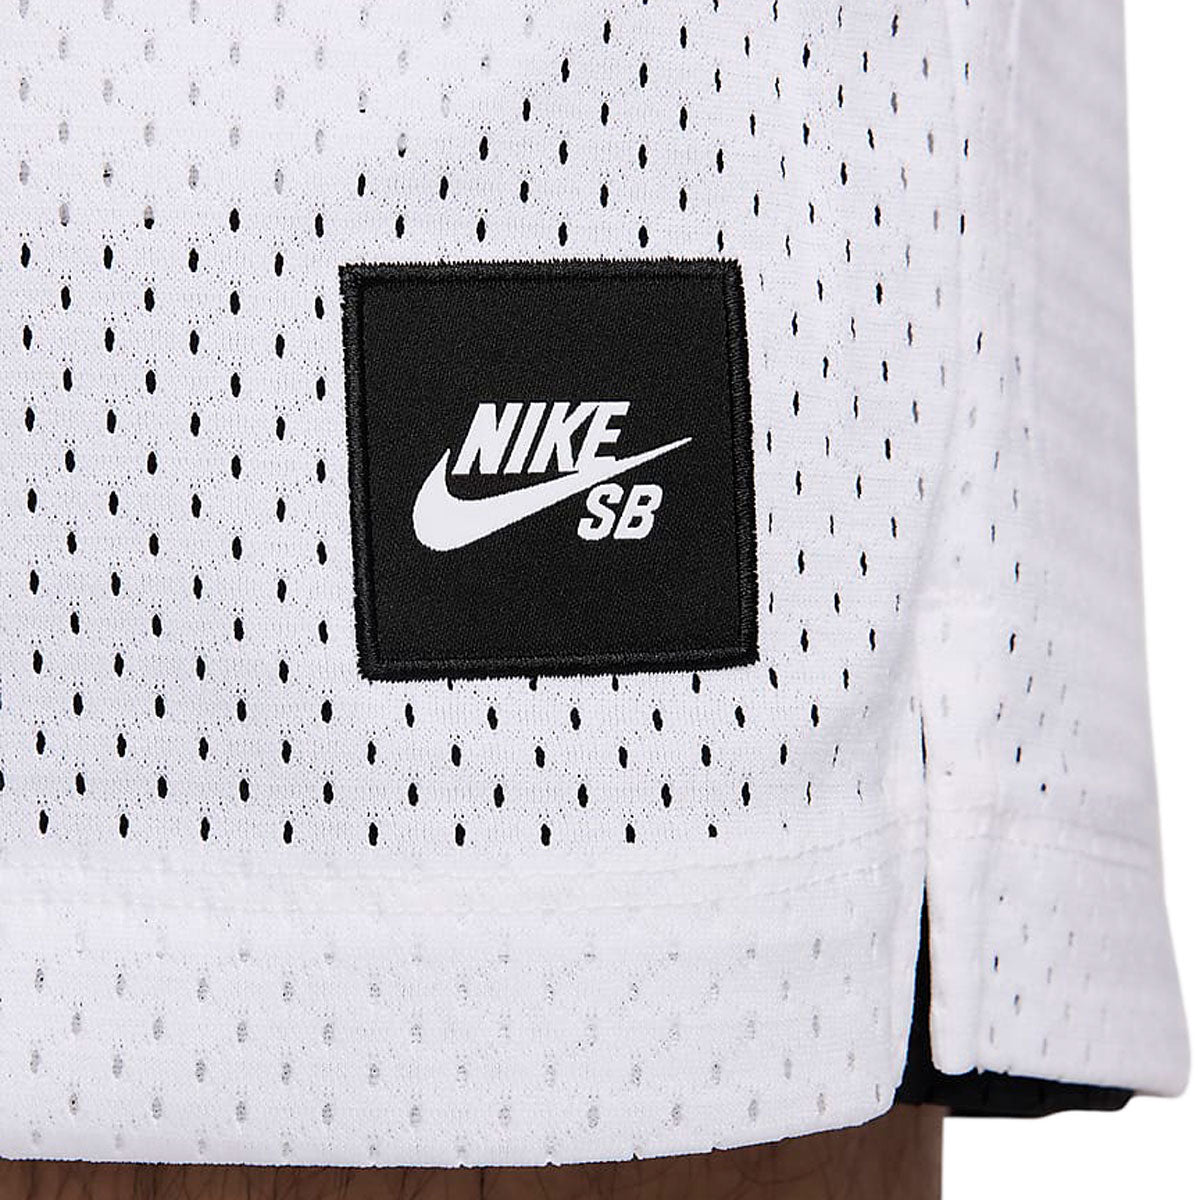 Nike SB Basketball Skate Shorts - Black/White image 5